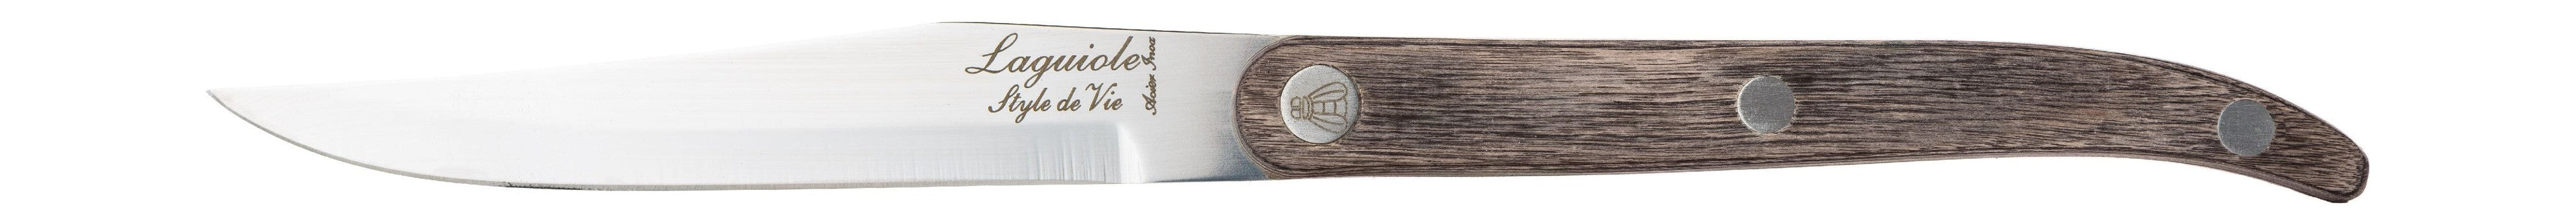 Style De Vie Authentique Laguiole Innovation Line Bøfknive 6-delt sæt, Grå Pakka med glat klinge